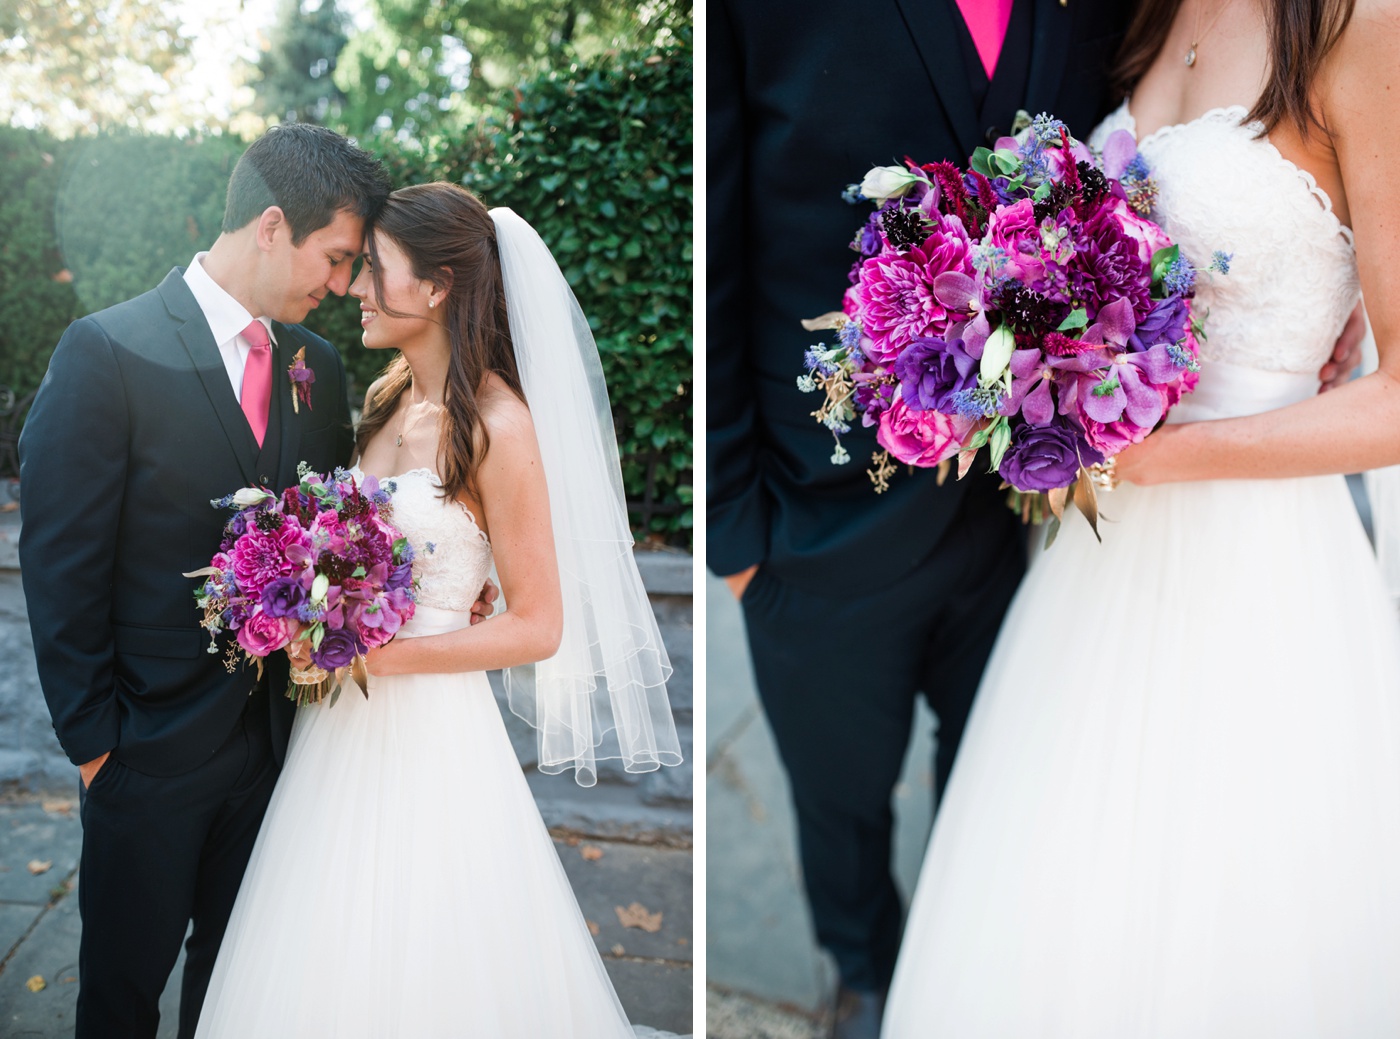 Sarah + Chris - Fairmount Bride Groom Portraits - Philadelphia Wedding Photographer photo